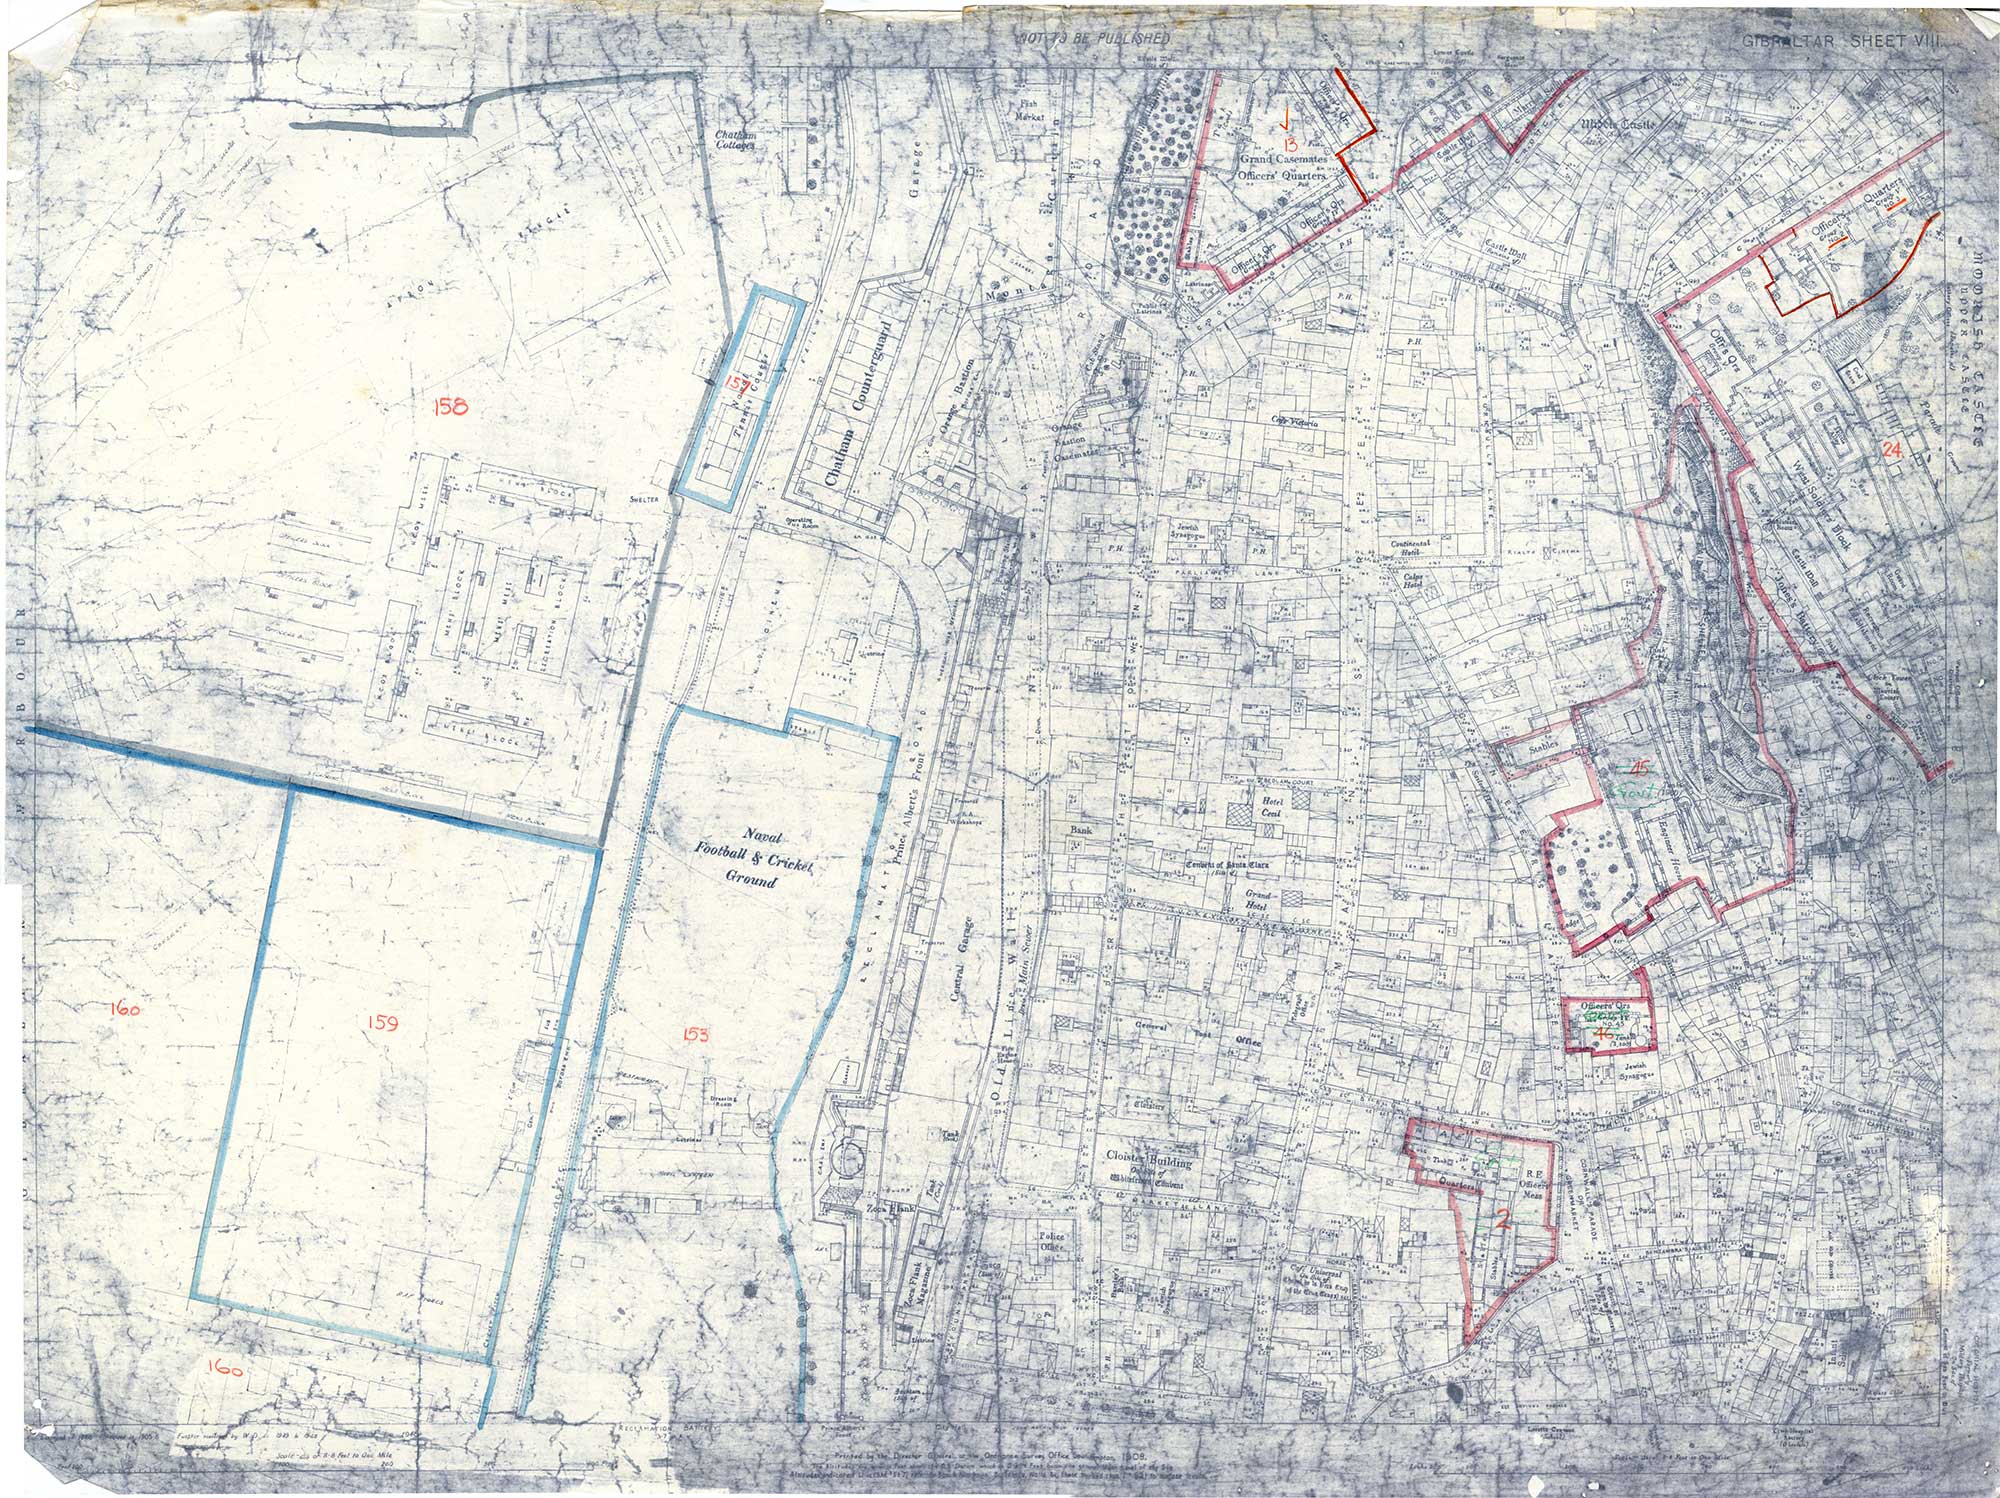 Map-37-OS-Sheet-8-Cloister-Ramp-to-Moorish-Castle-1948